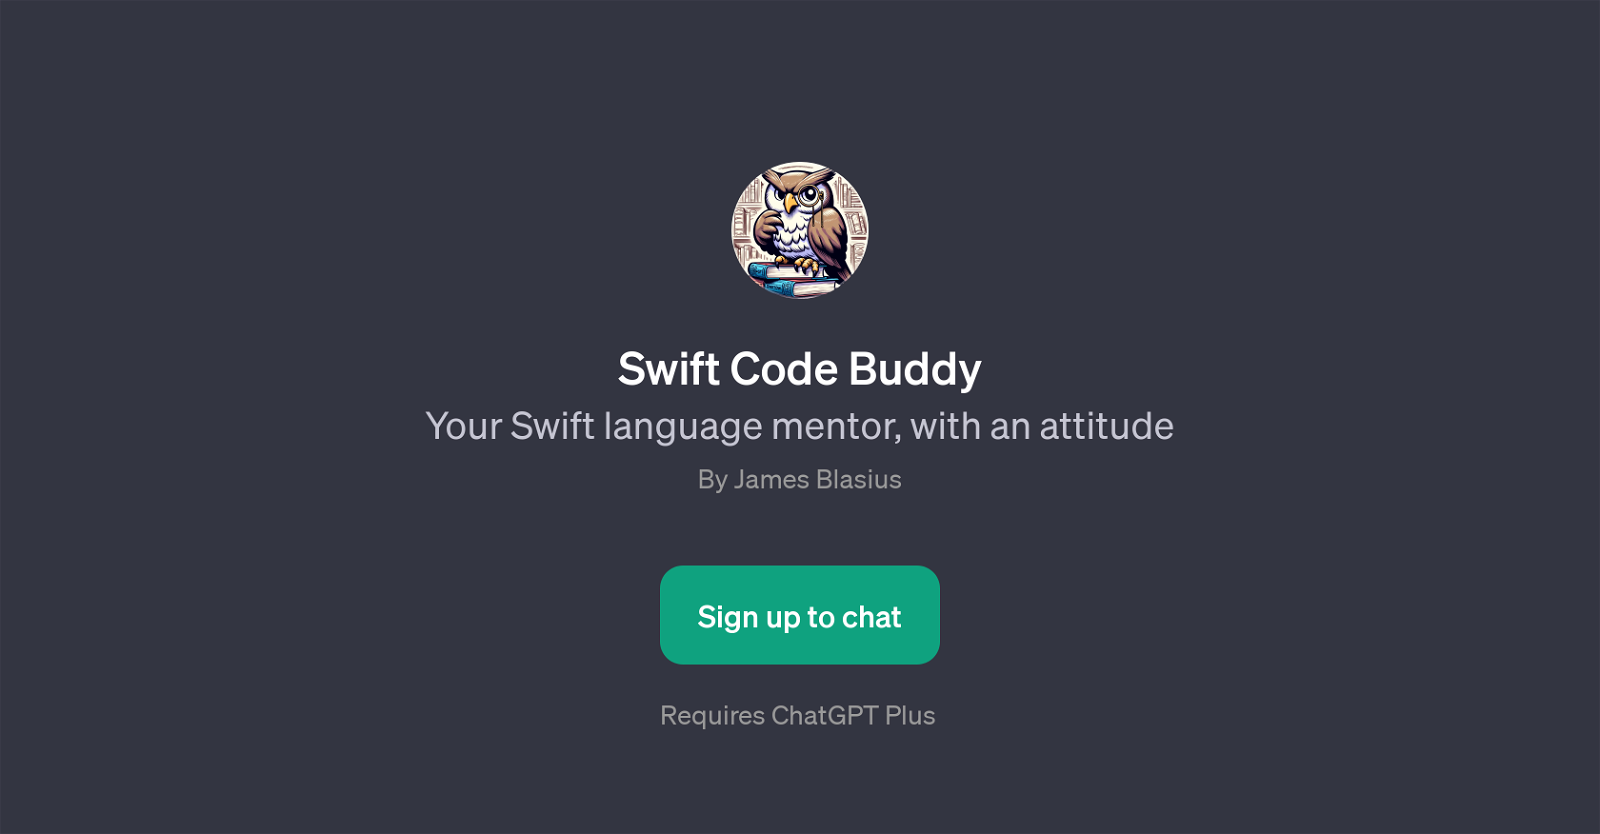 Swift Code Buddy website